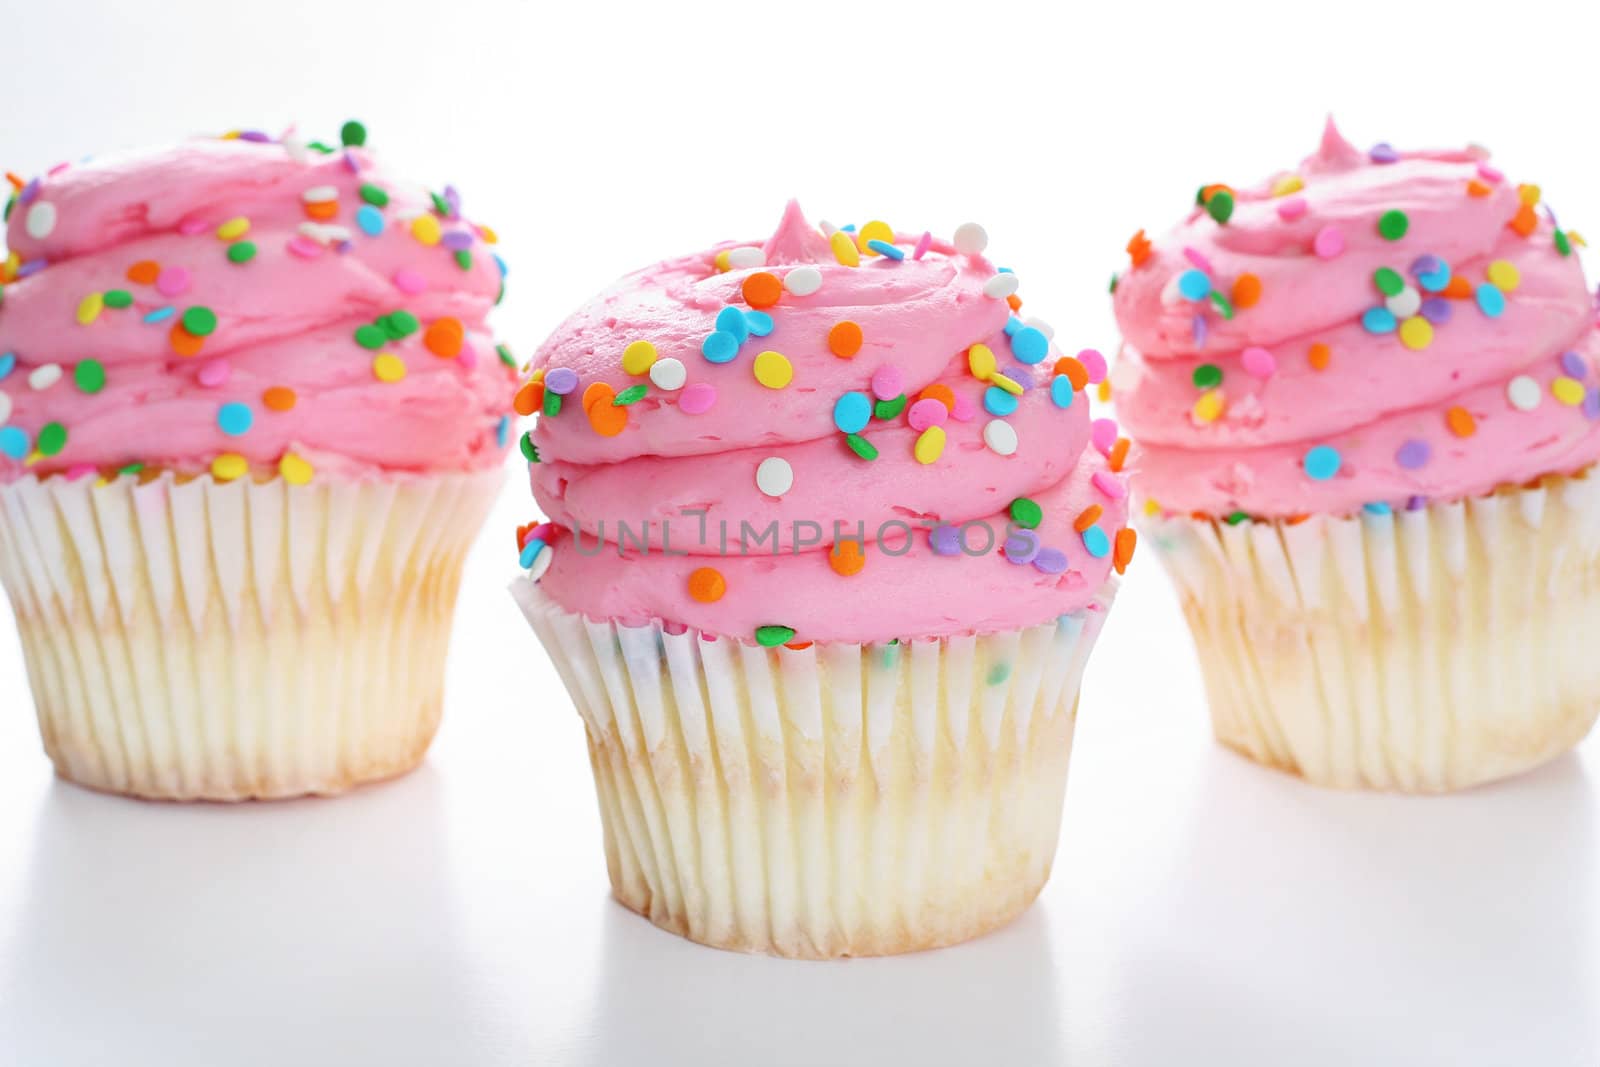 Three cupcakes with sprinkles